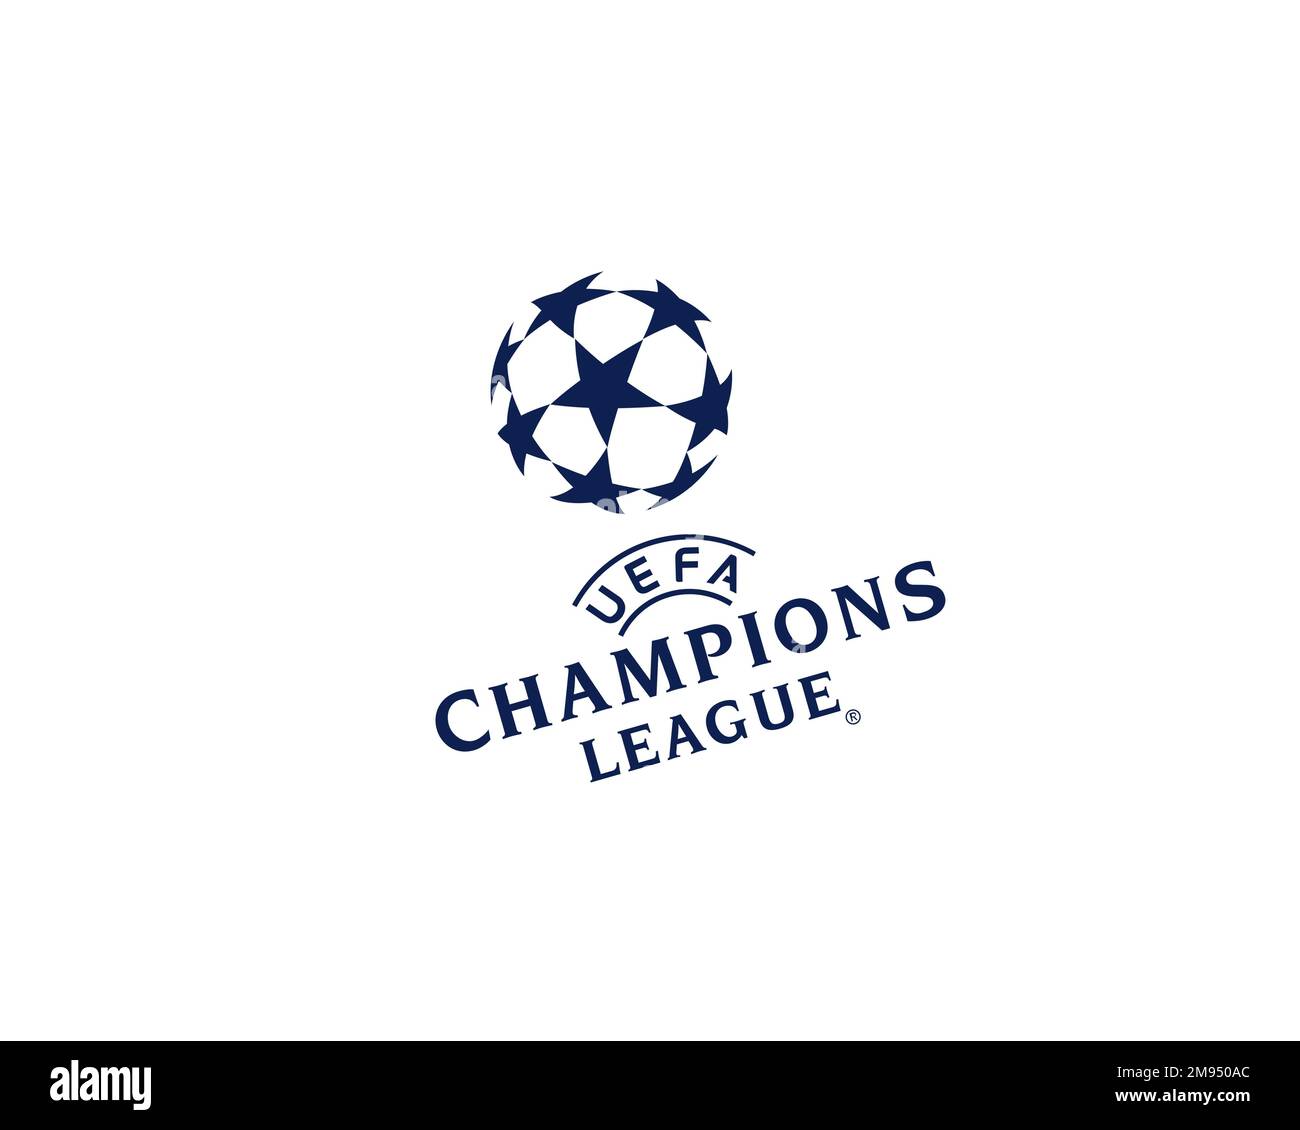 UEFA Champions League, logo ruotato, sfondo bianco Foto Stock